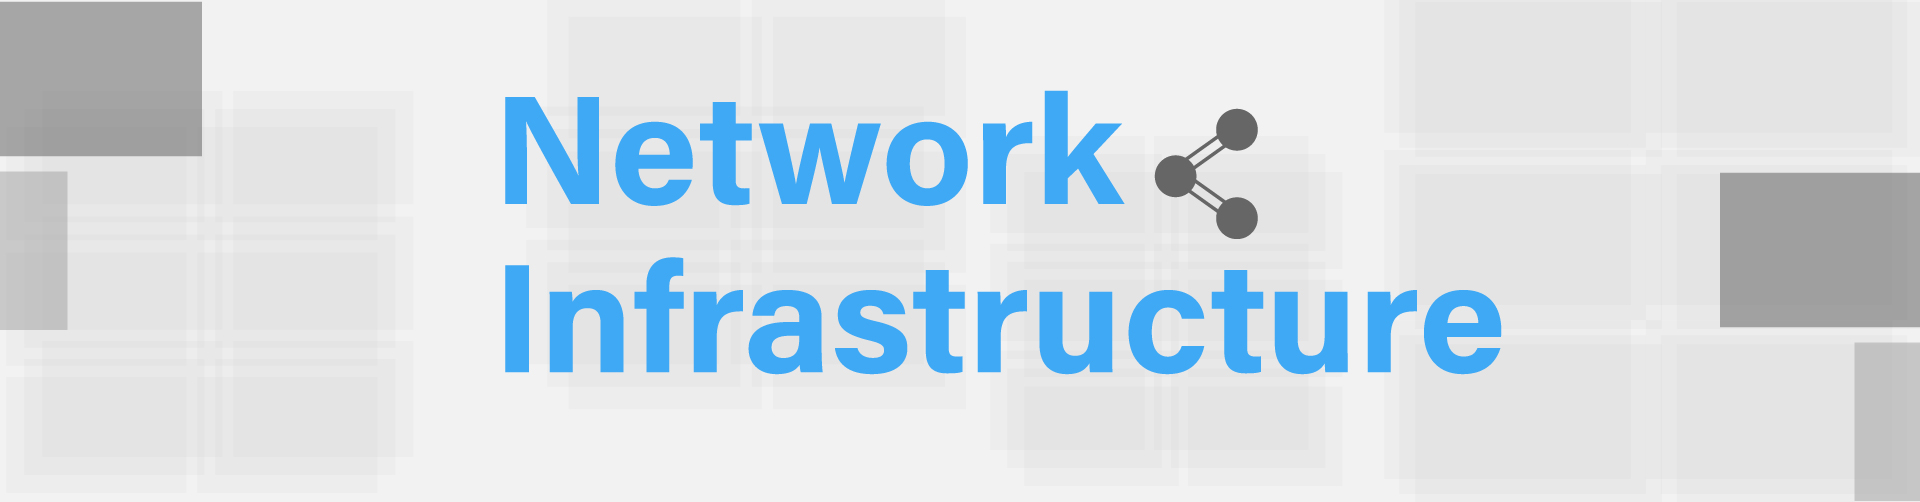 Network-Infrastructure1